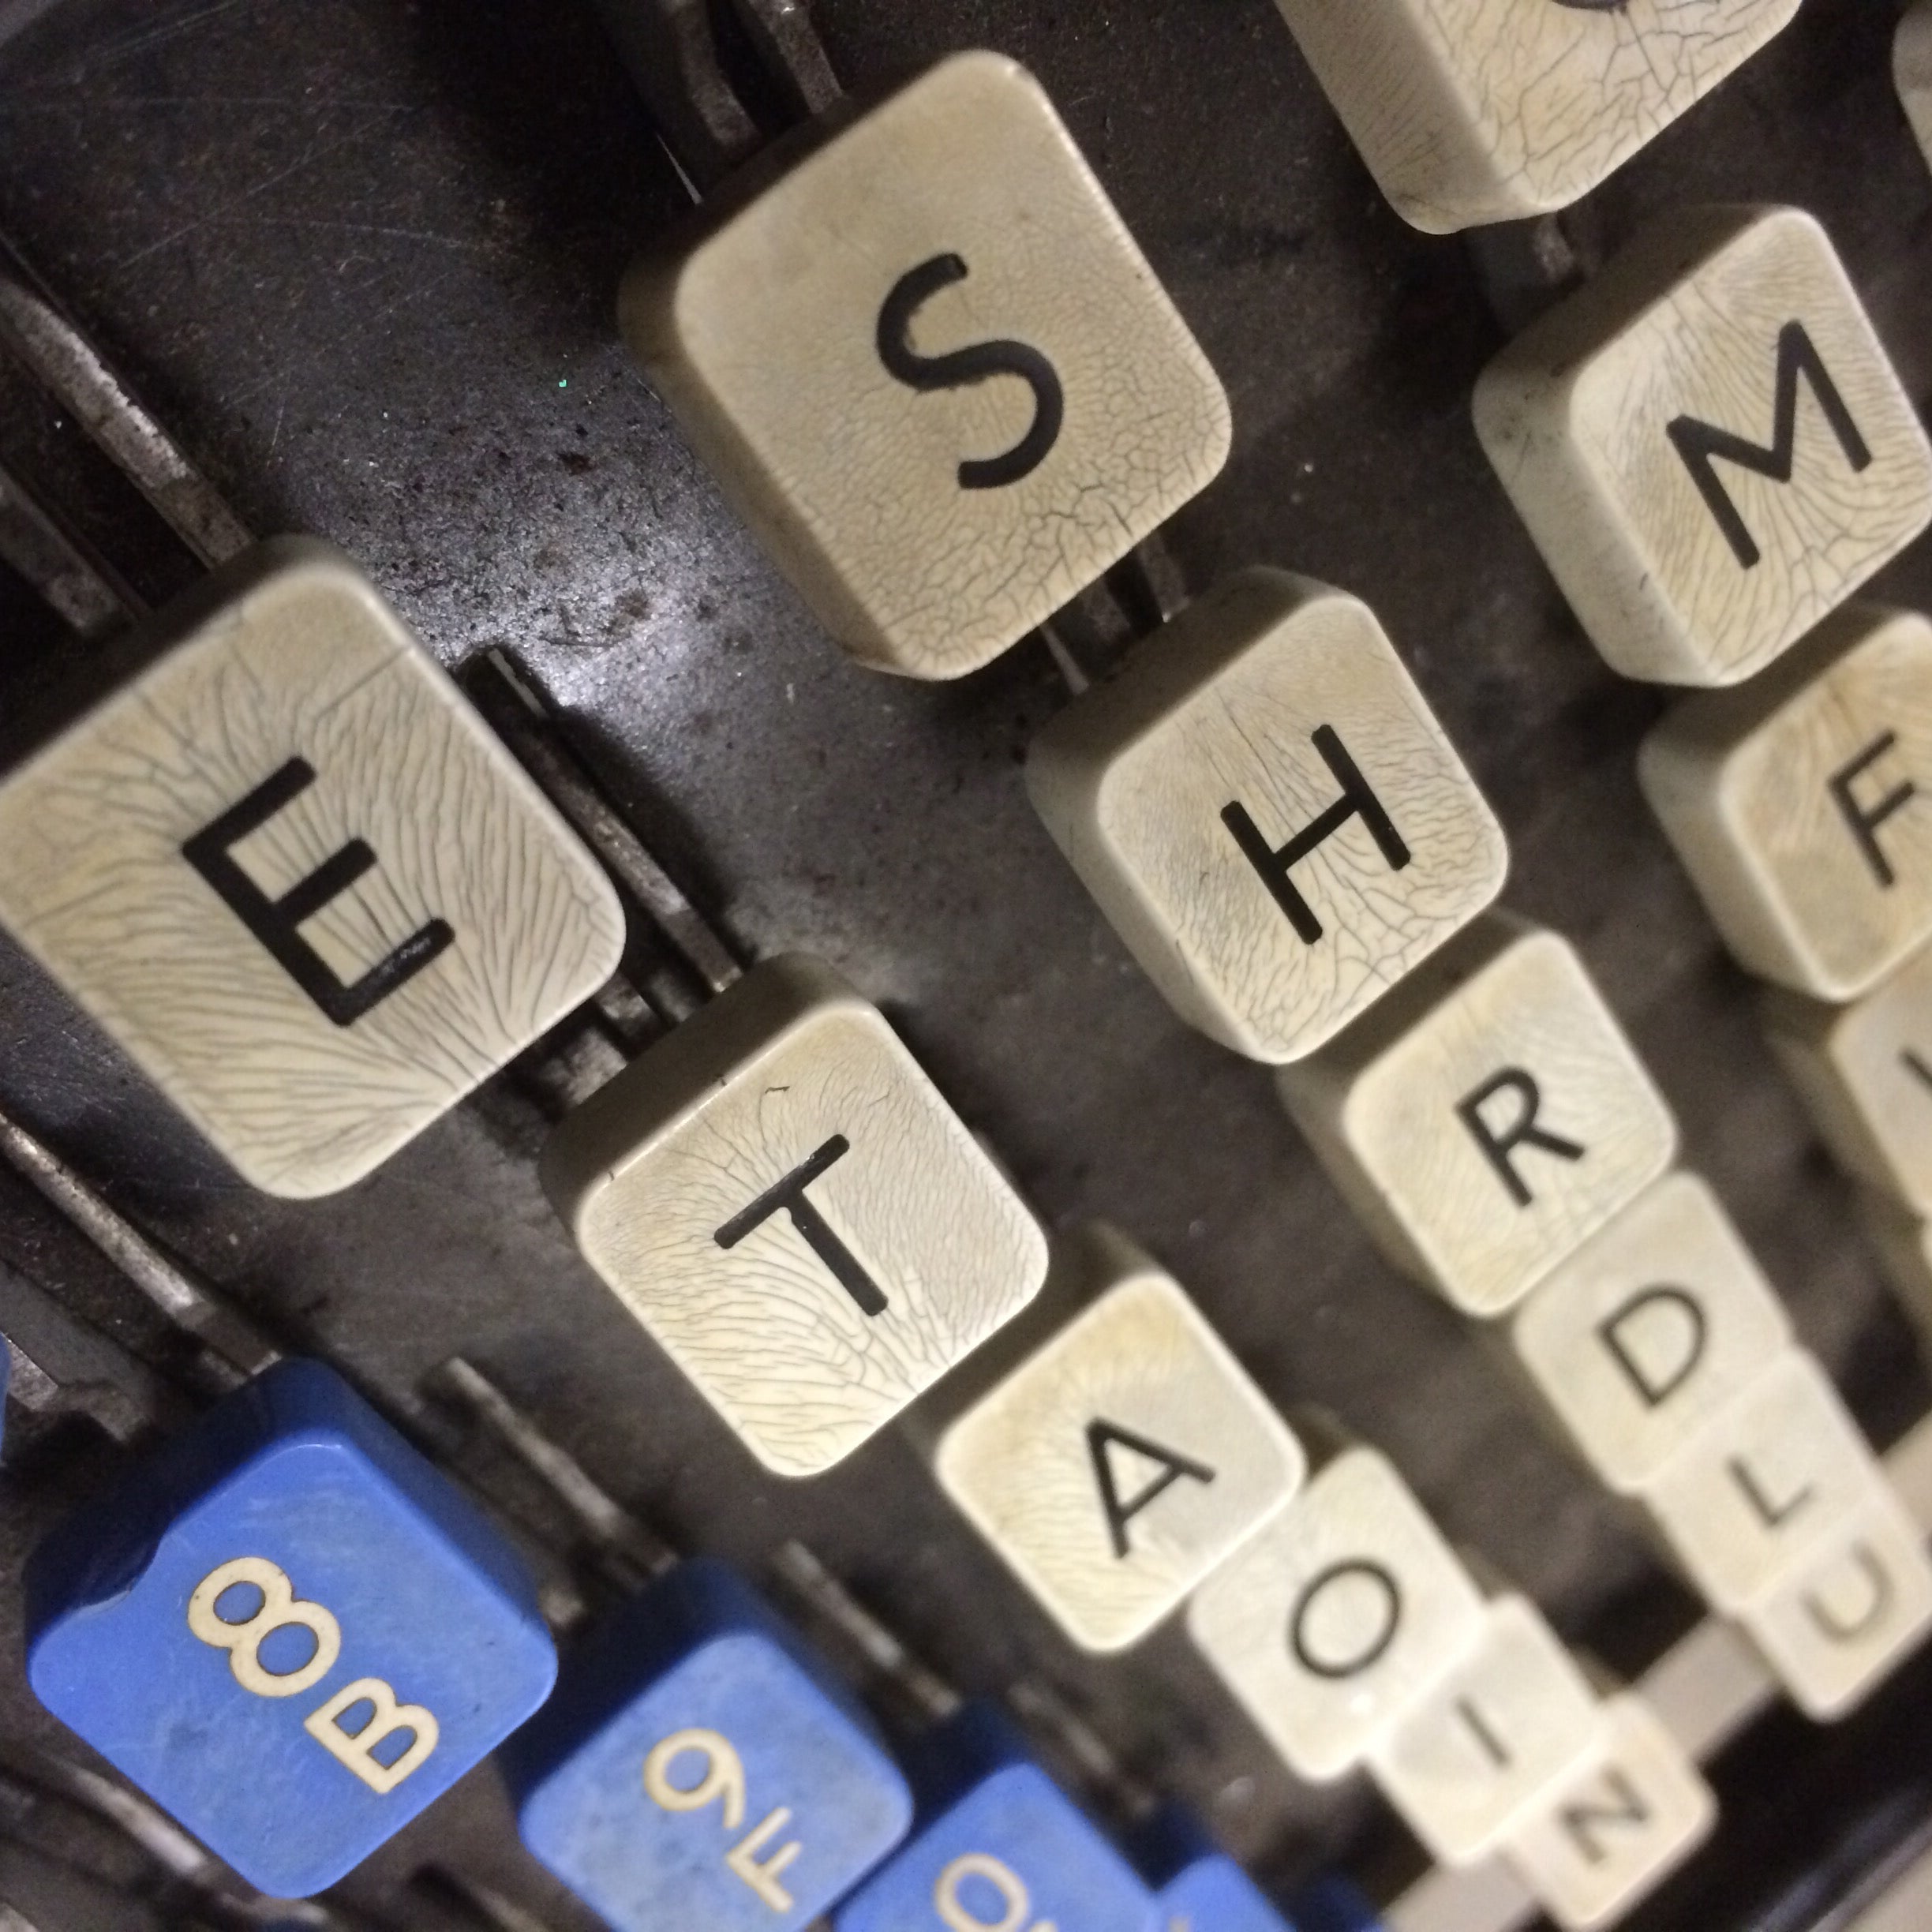 the etaoin shrdlu keys on a Linotype machine